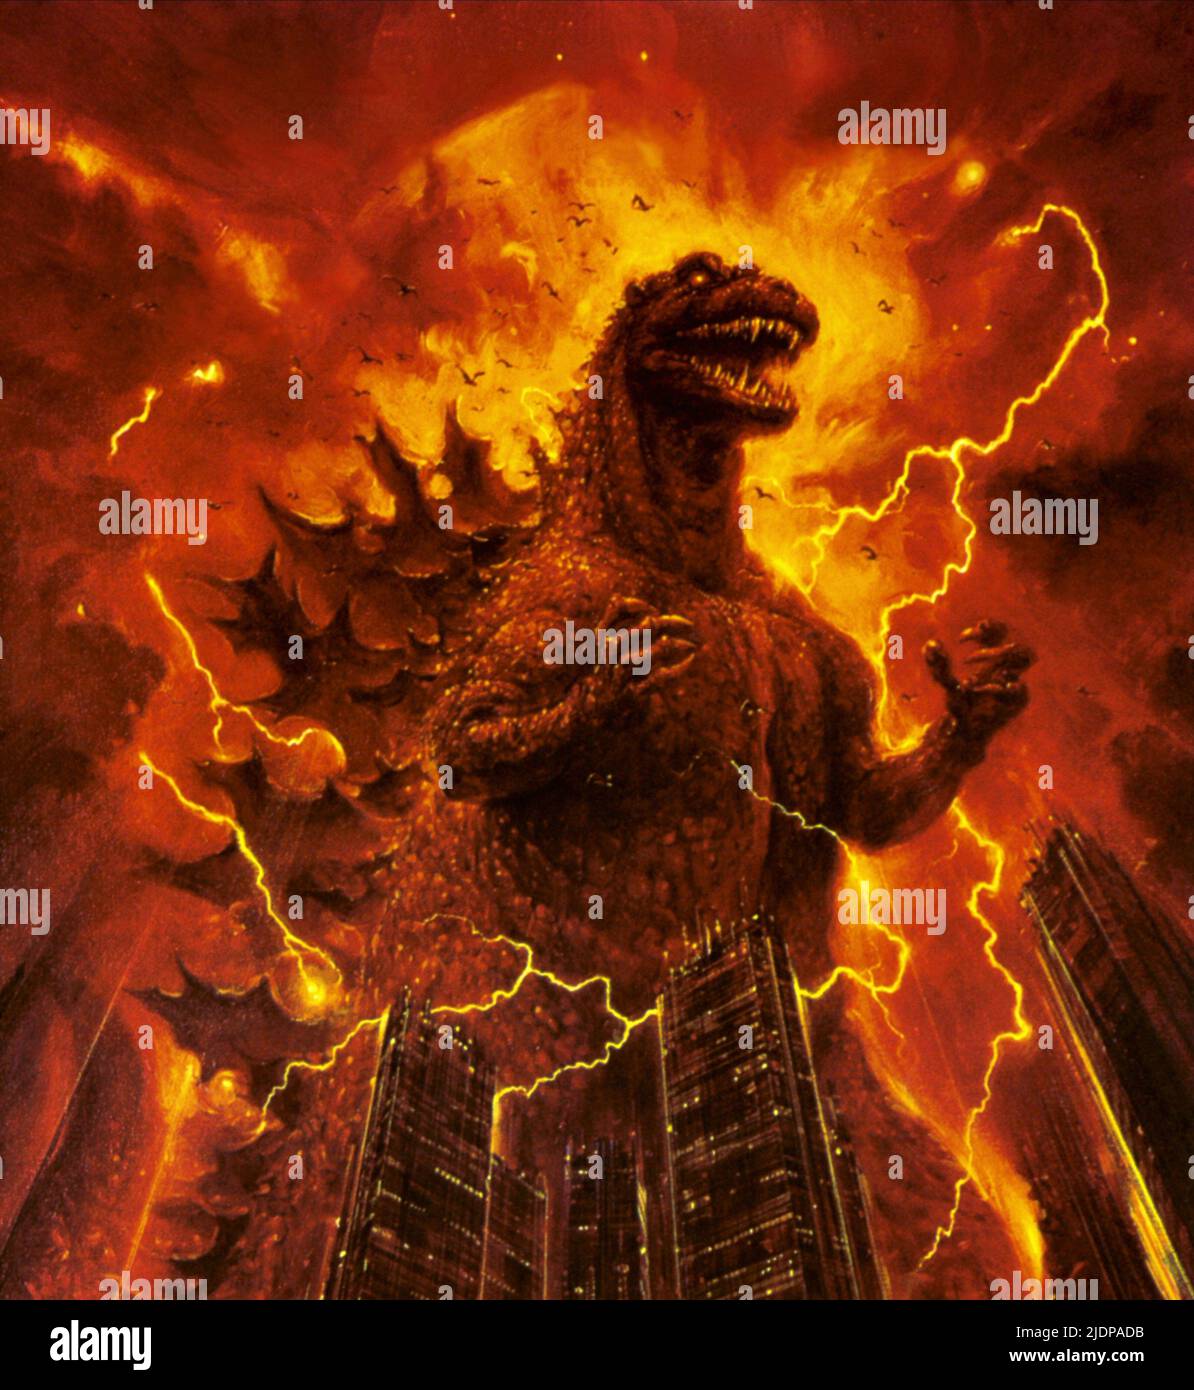 Godzilla movie hi-res stock photography and images - Alamy